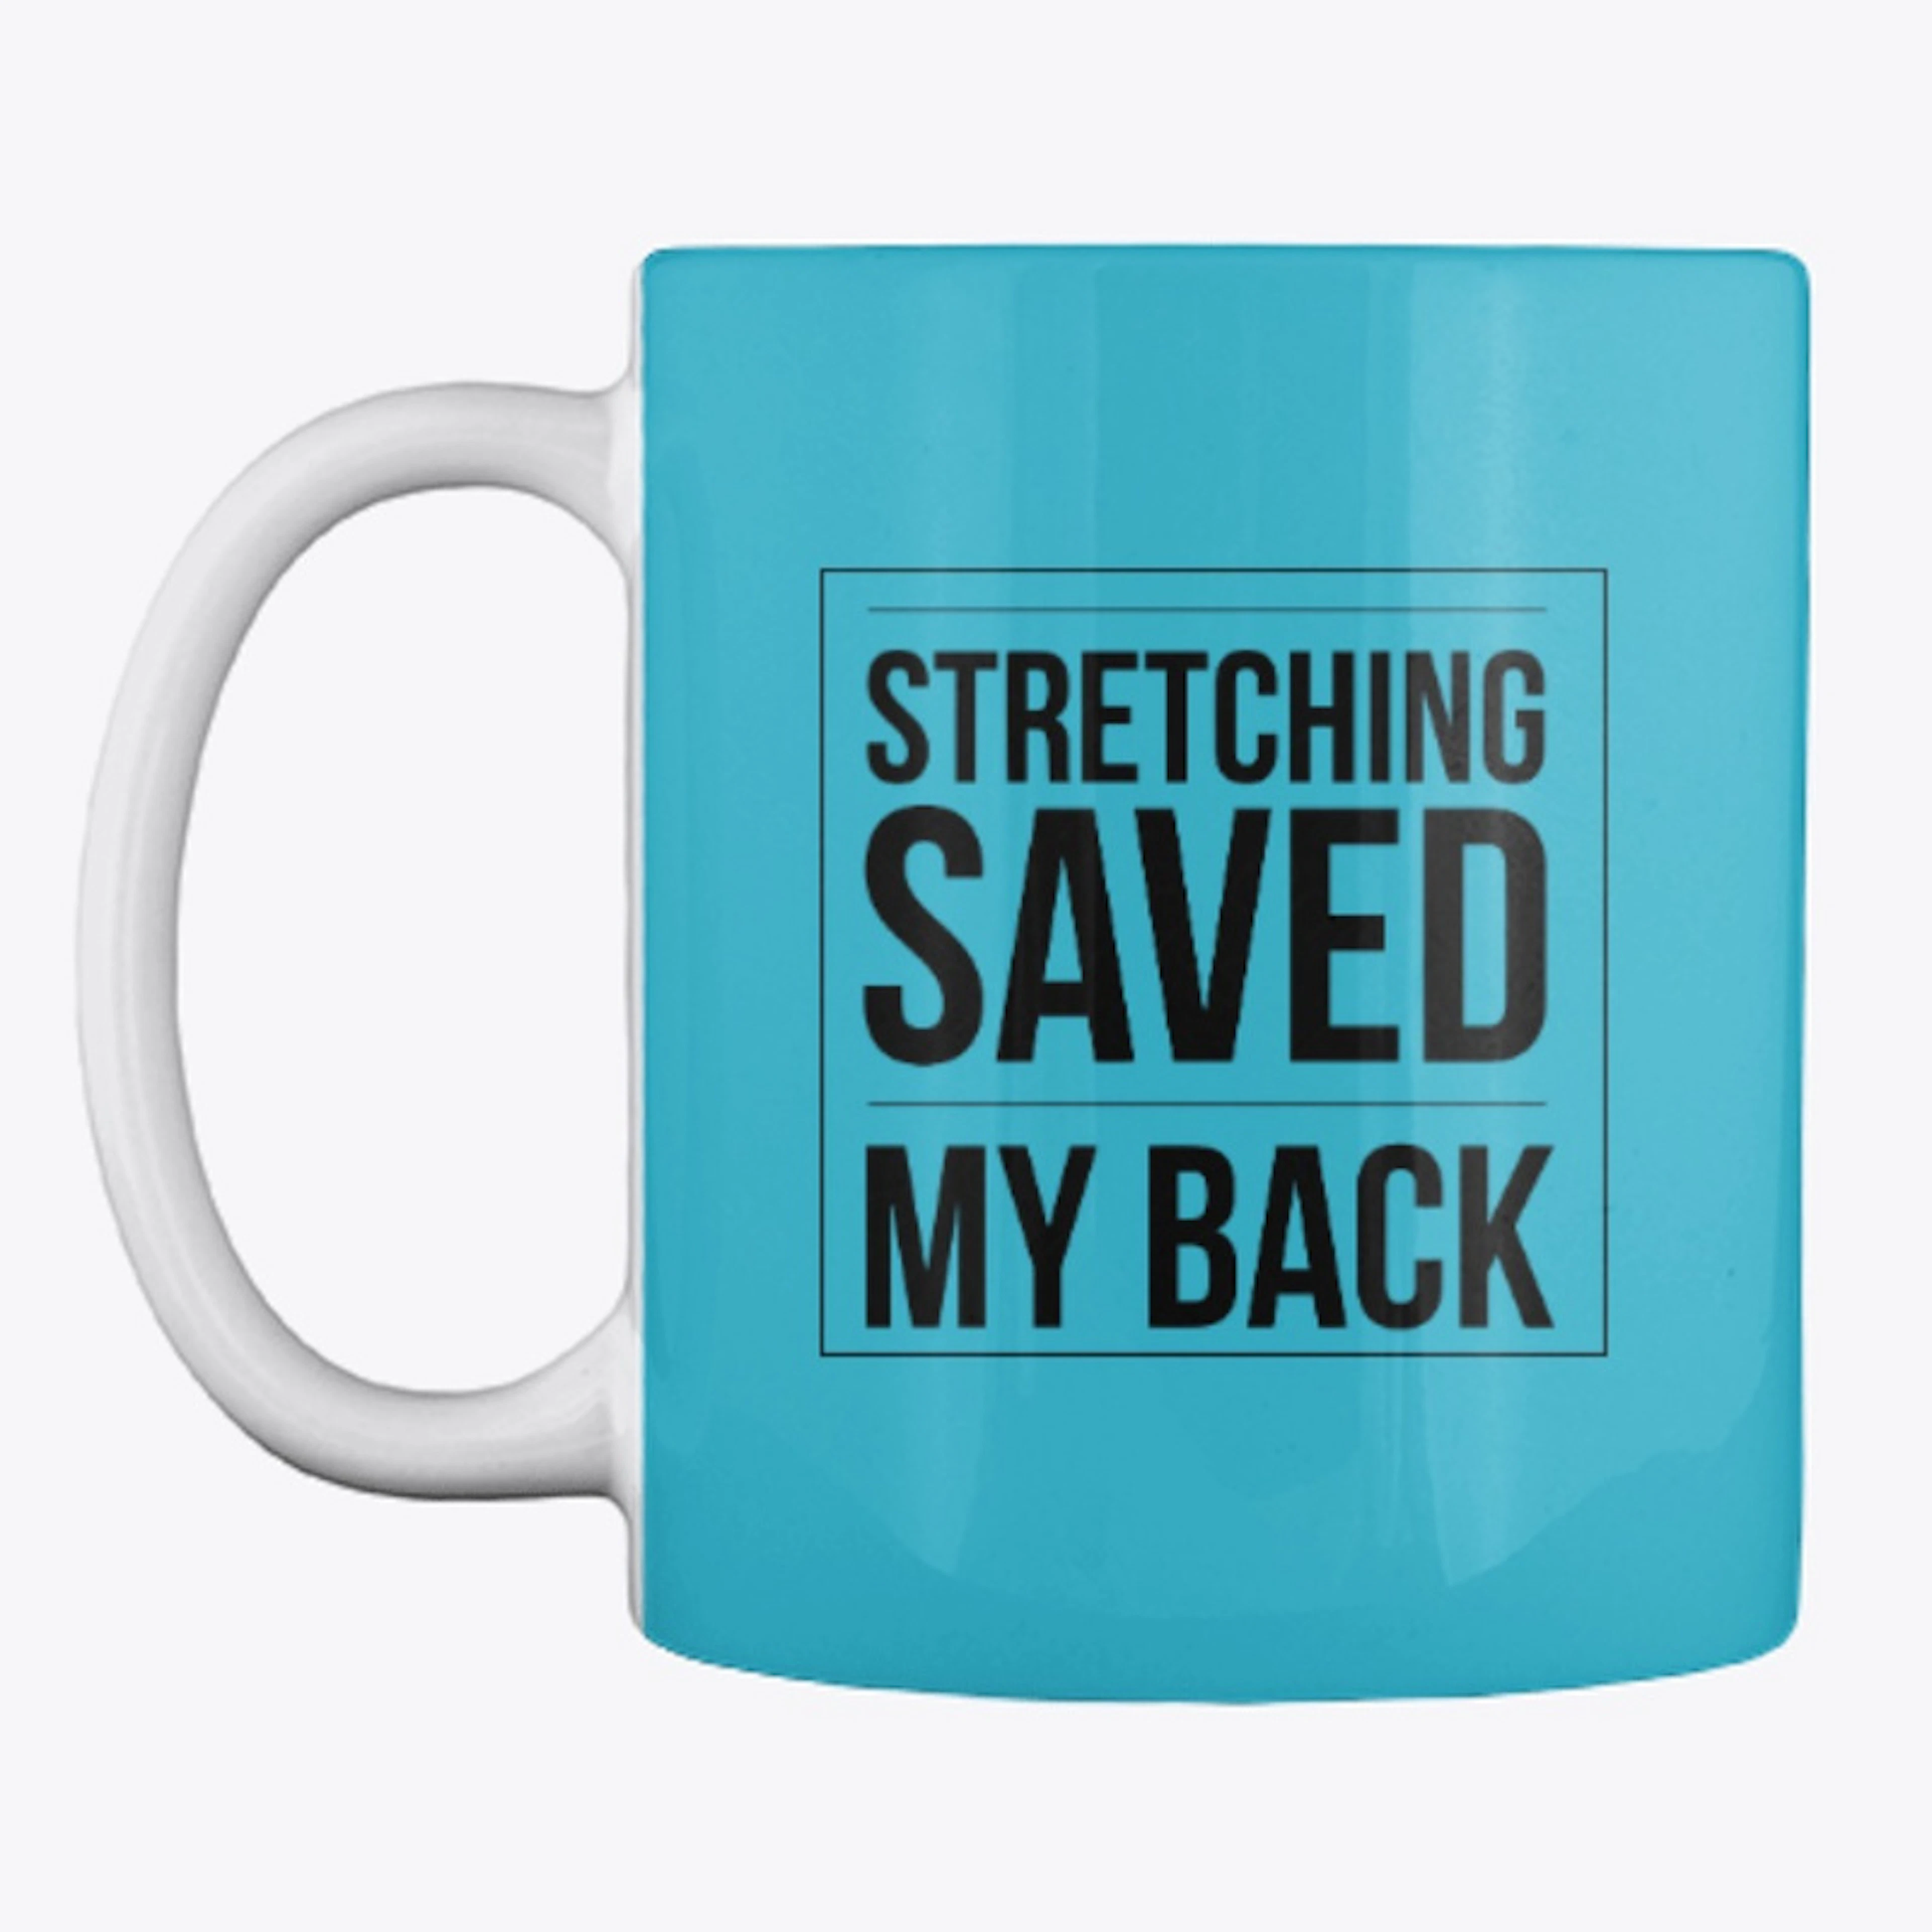 Stretching saved my back coffee mug 